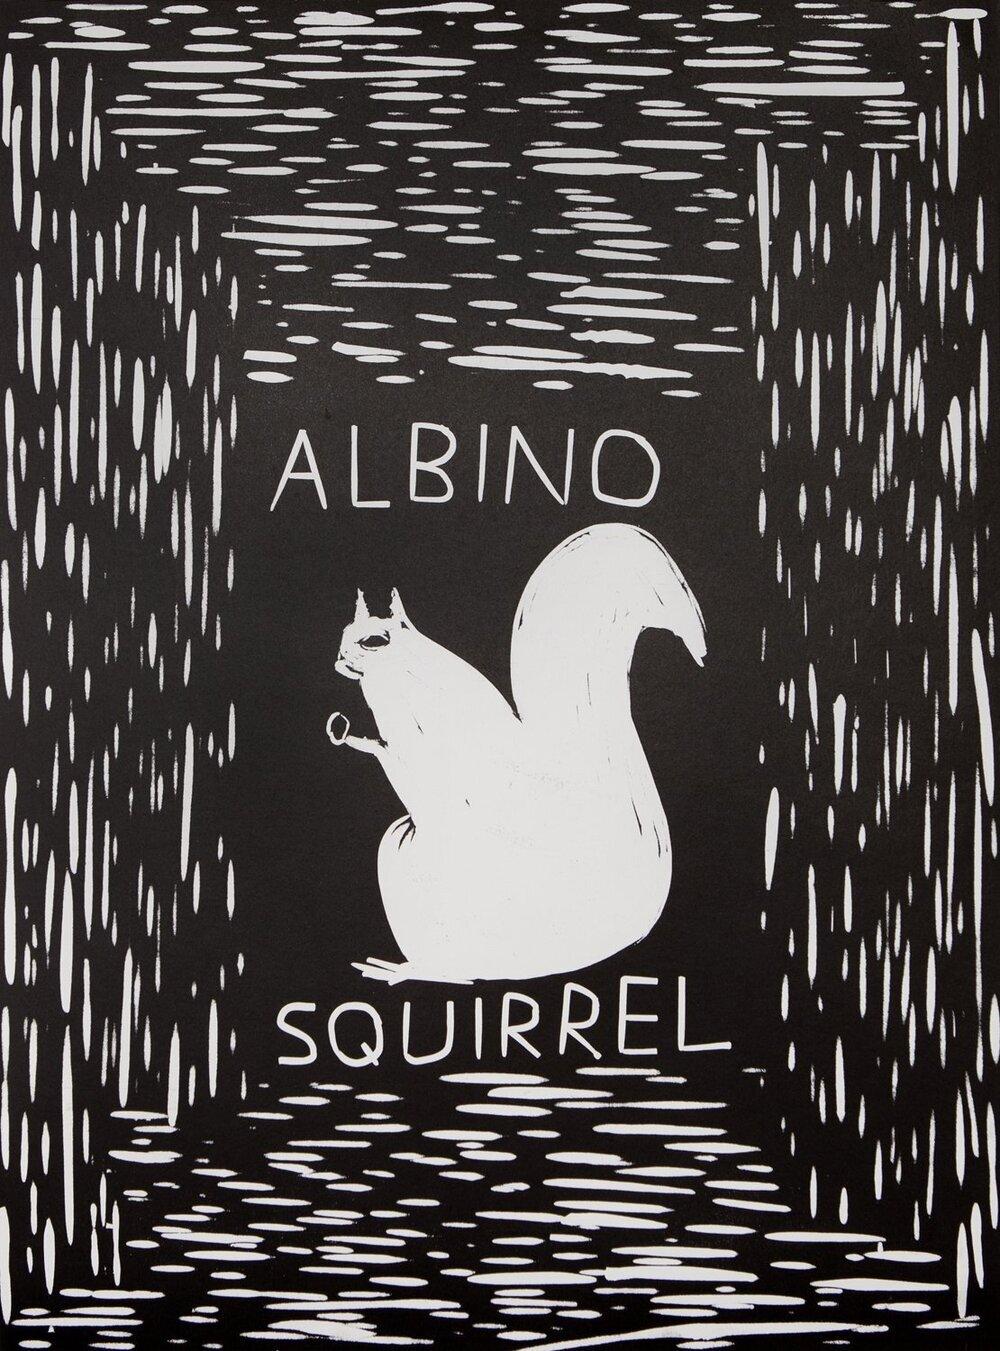 David Shrigley - Albino Squirrel, 2017